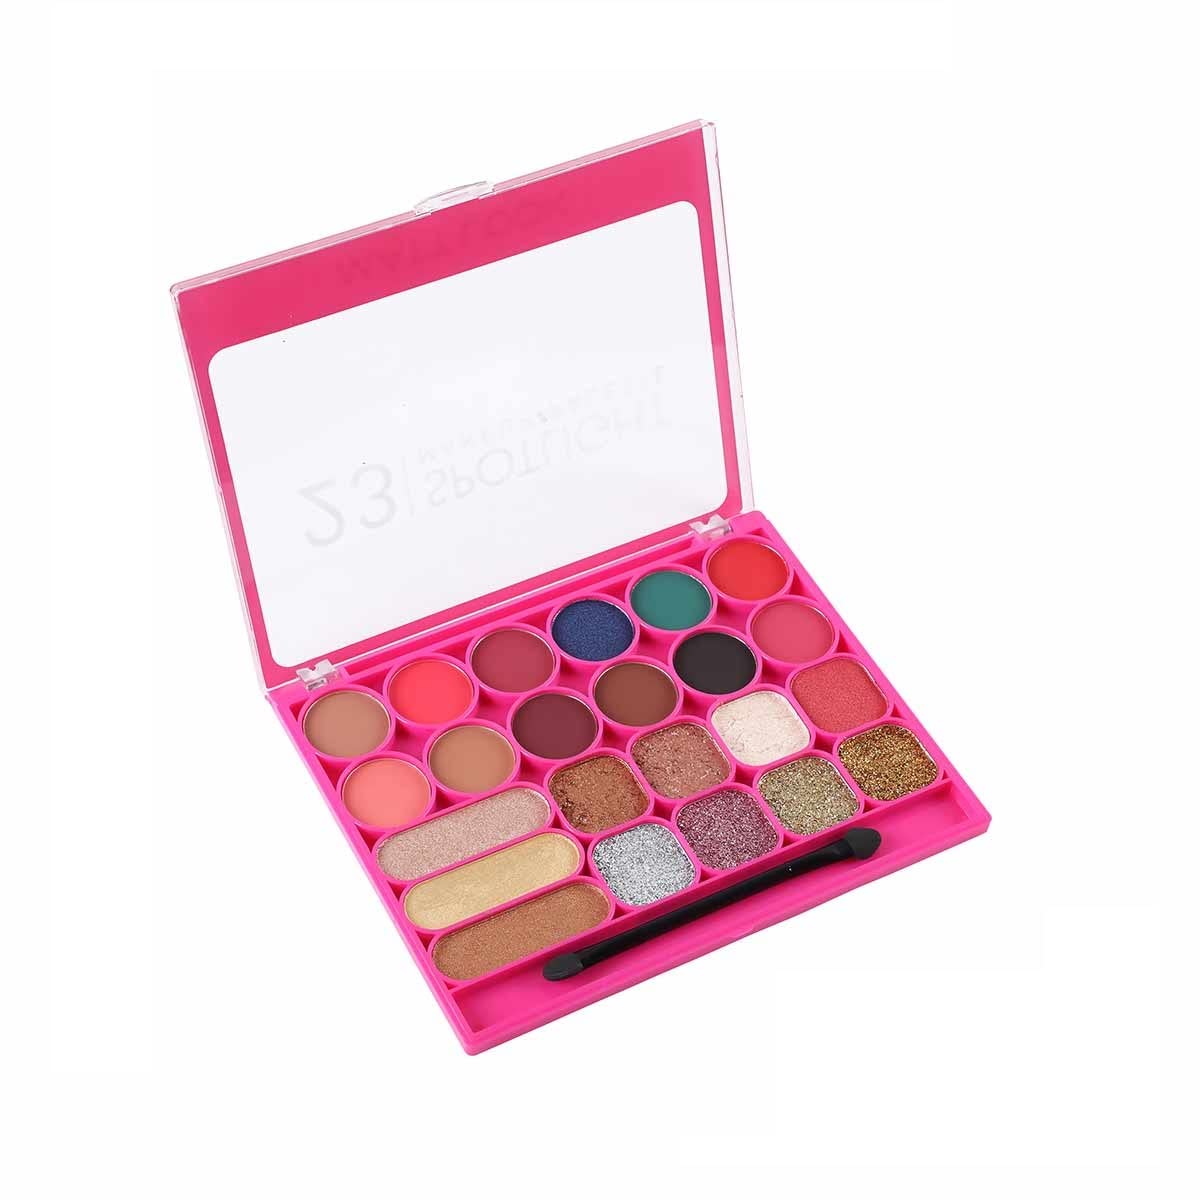 Mattlook Pink Sugar 23 Spotlight Makeup Palette, Multicolor-01, 35gm